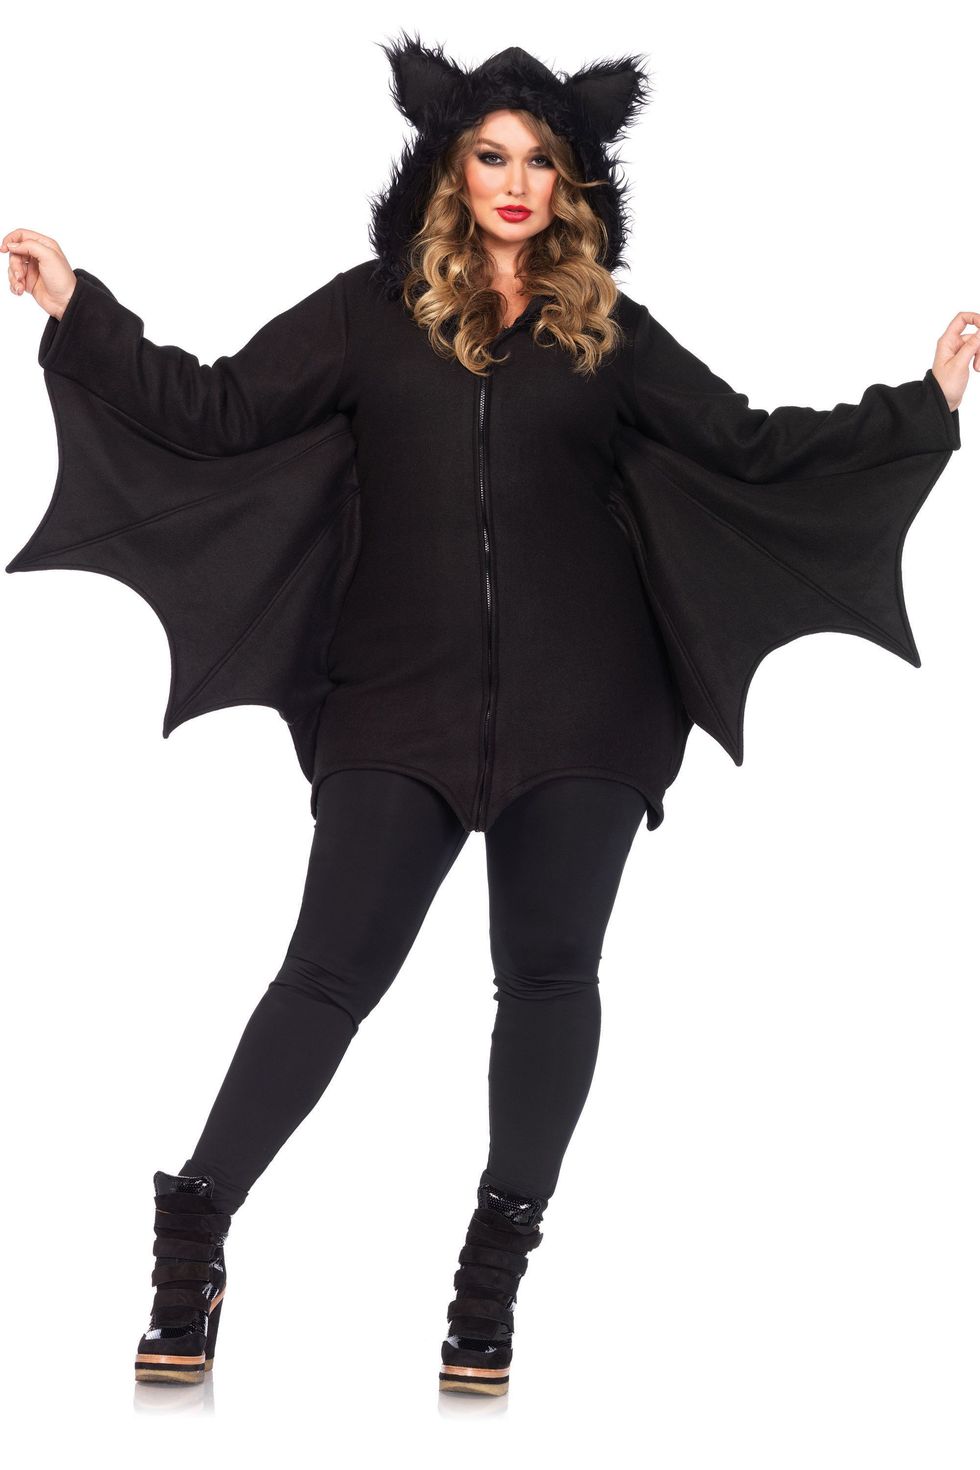 40+ Plus Size Halloween Costume Ideas for Women & Men